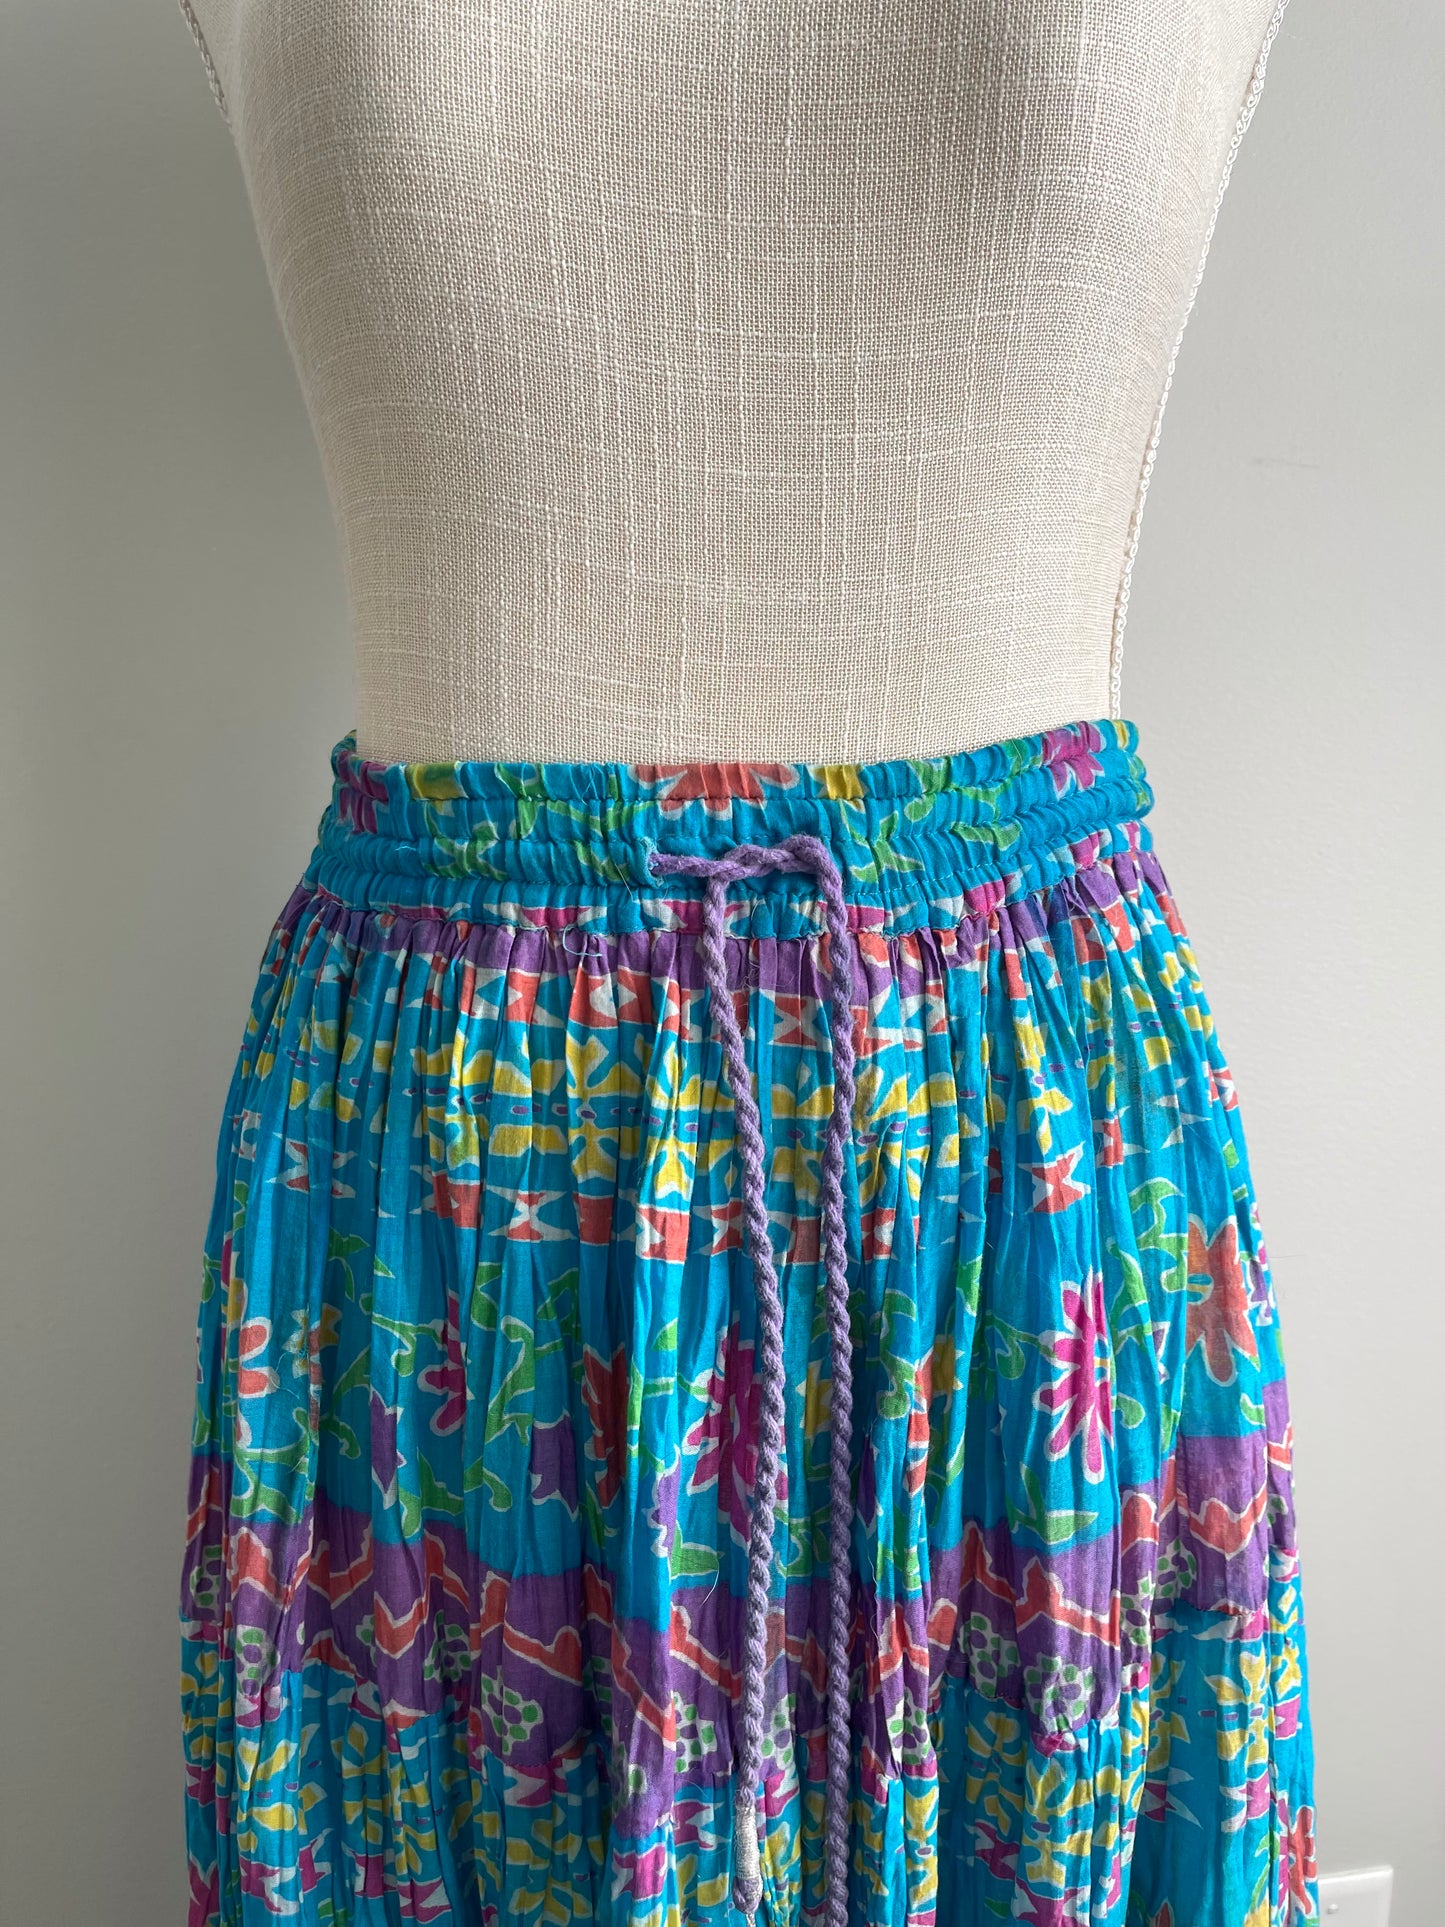 Petite Sophisticate Floral Midi Skirt